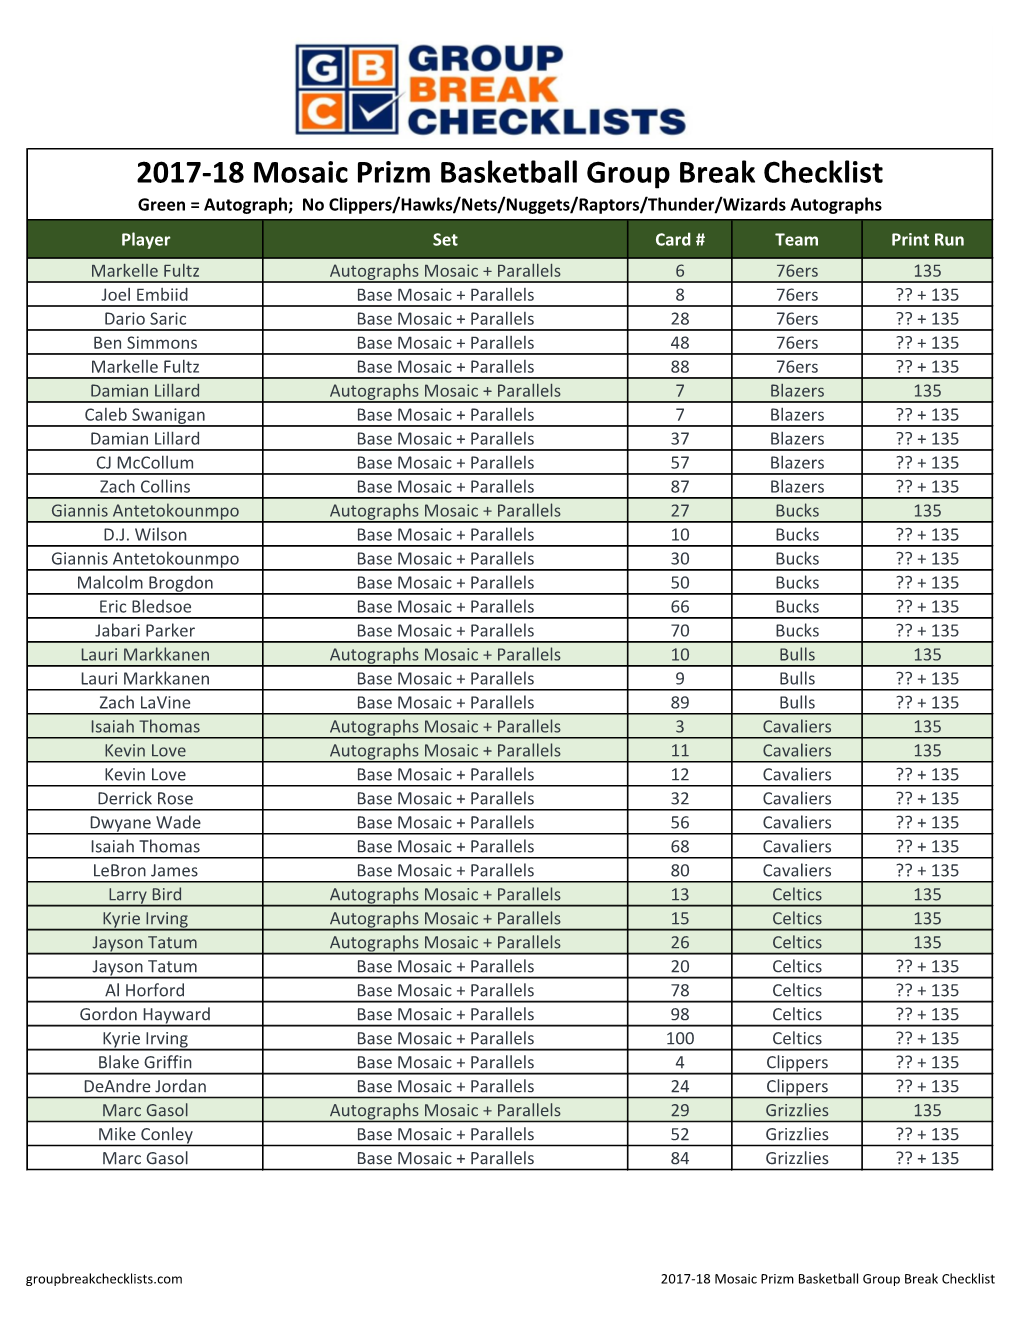 2017-18 Mosaic Prizmbasketball Checklist